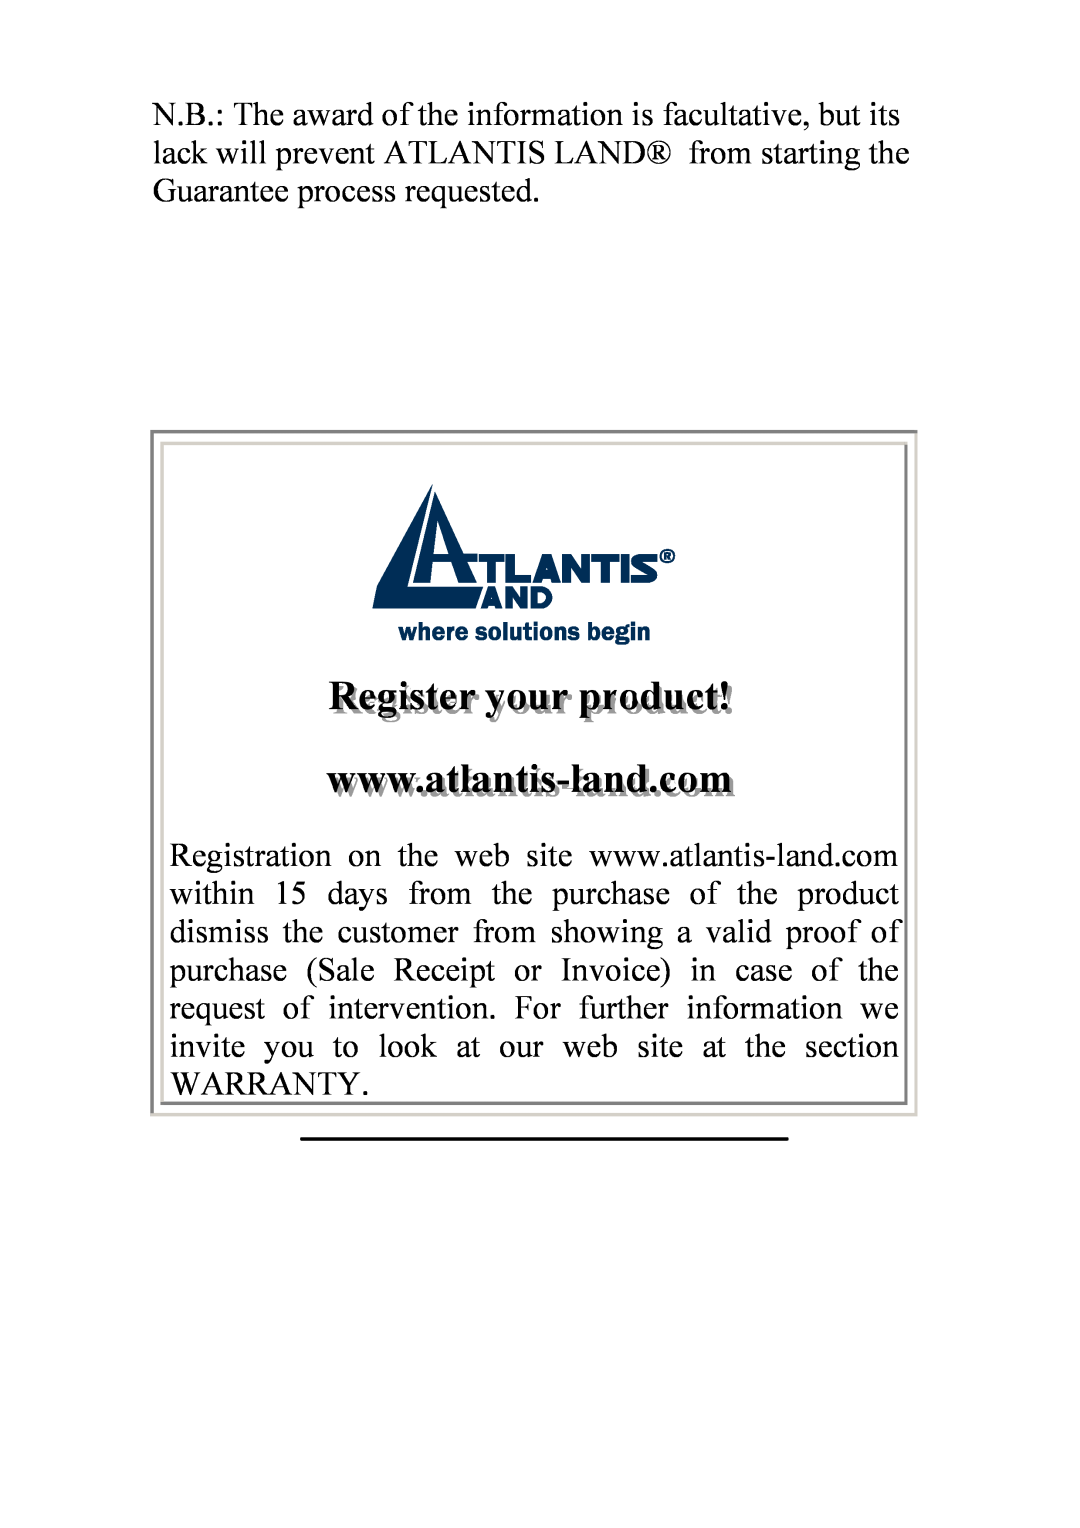 Atlantis Land AO2-F5P manual Regiisstter your productt, Warranty 